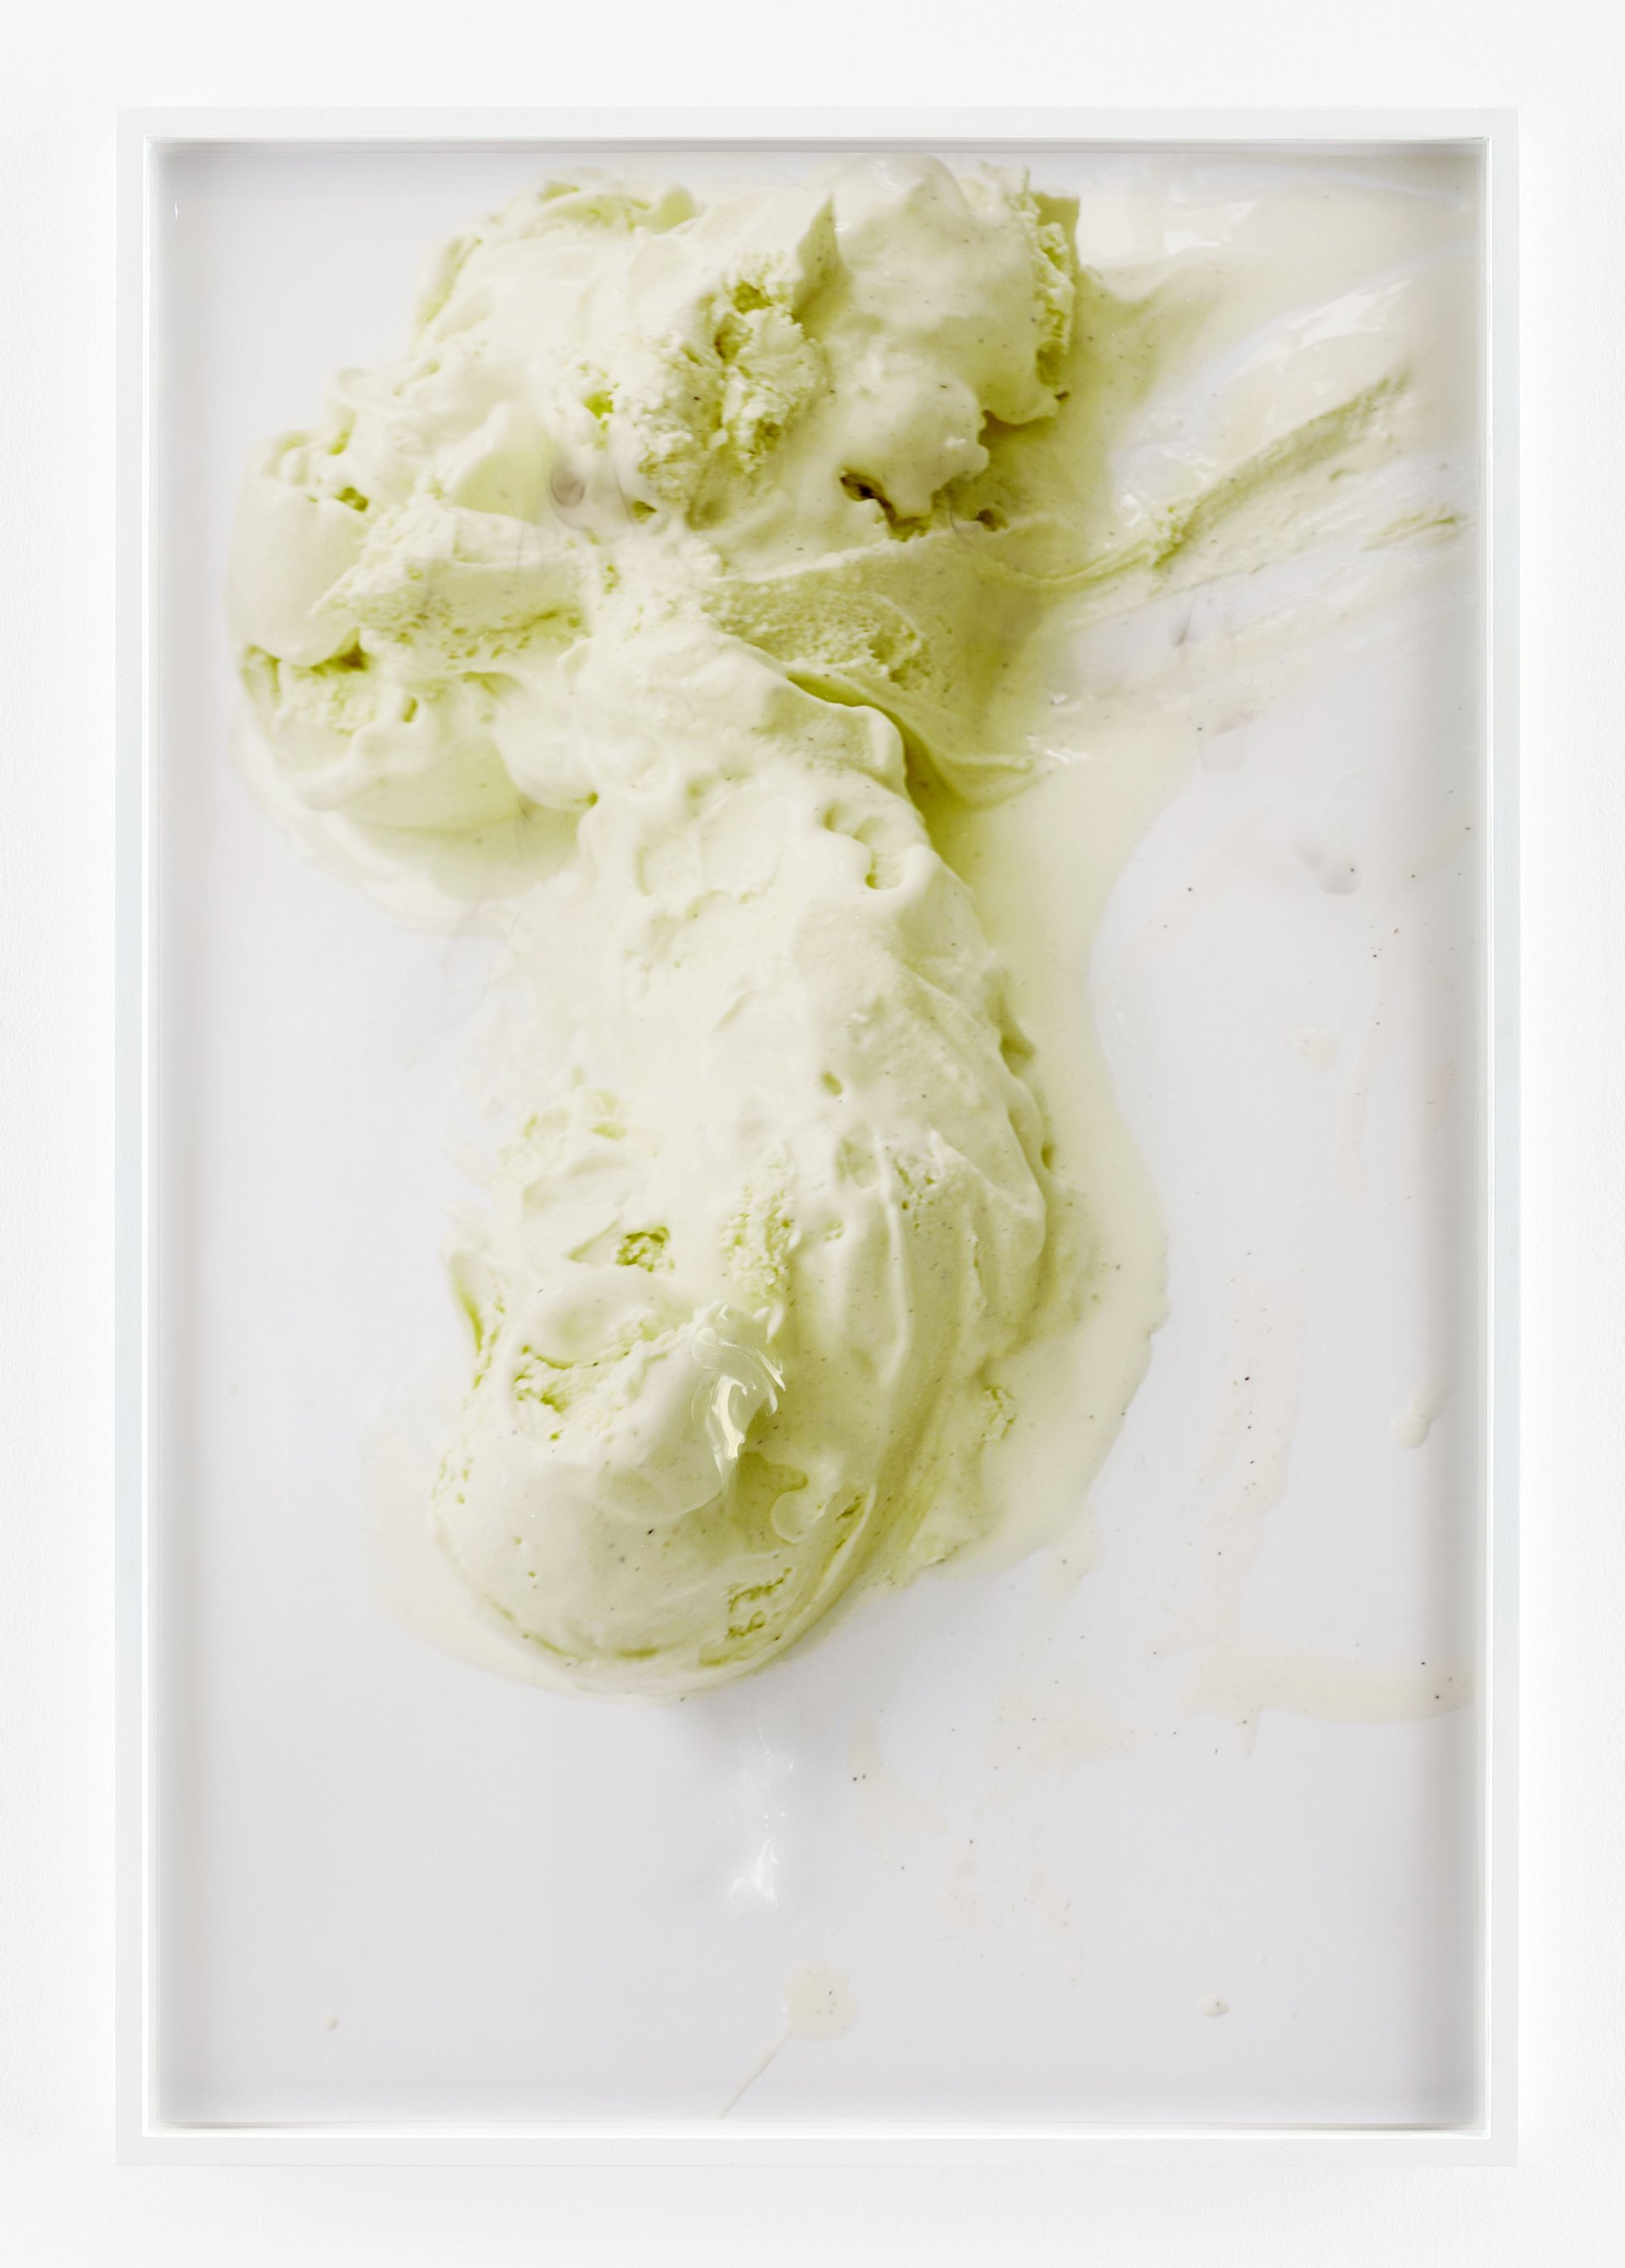 Lisa HolzerUnd ich hab schon wieder Hunger (Vanilleeis) / You make me very hungry (vanilla ice cream), 2018Pigment print on cotton paper, semigloss enamel on wood, vanilla ice cream on glass110 x 74.5 cm